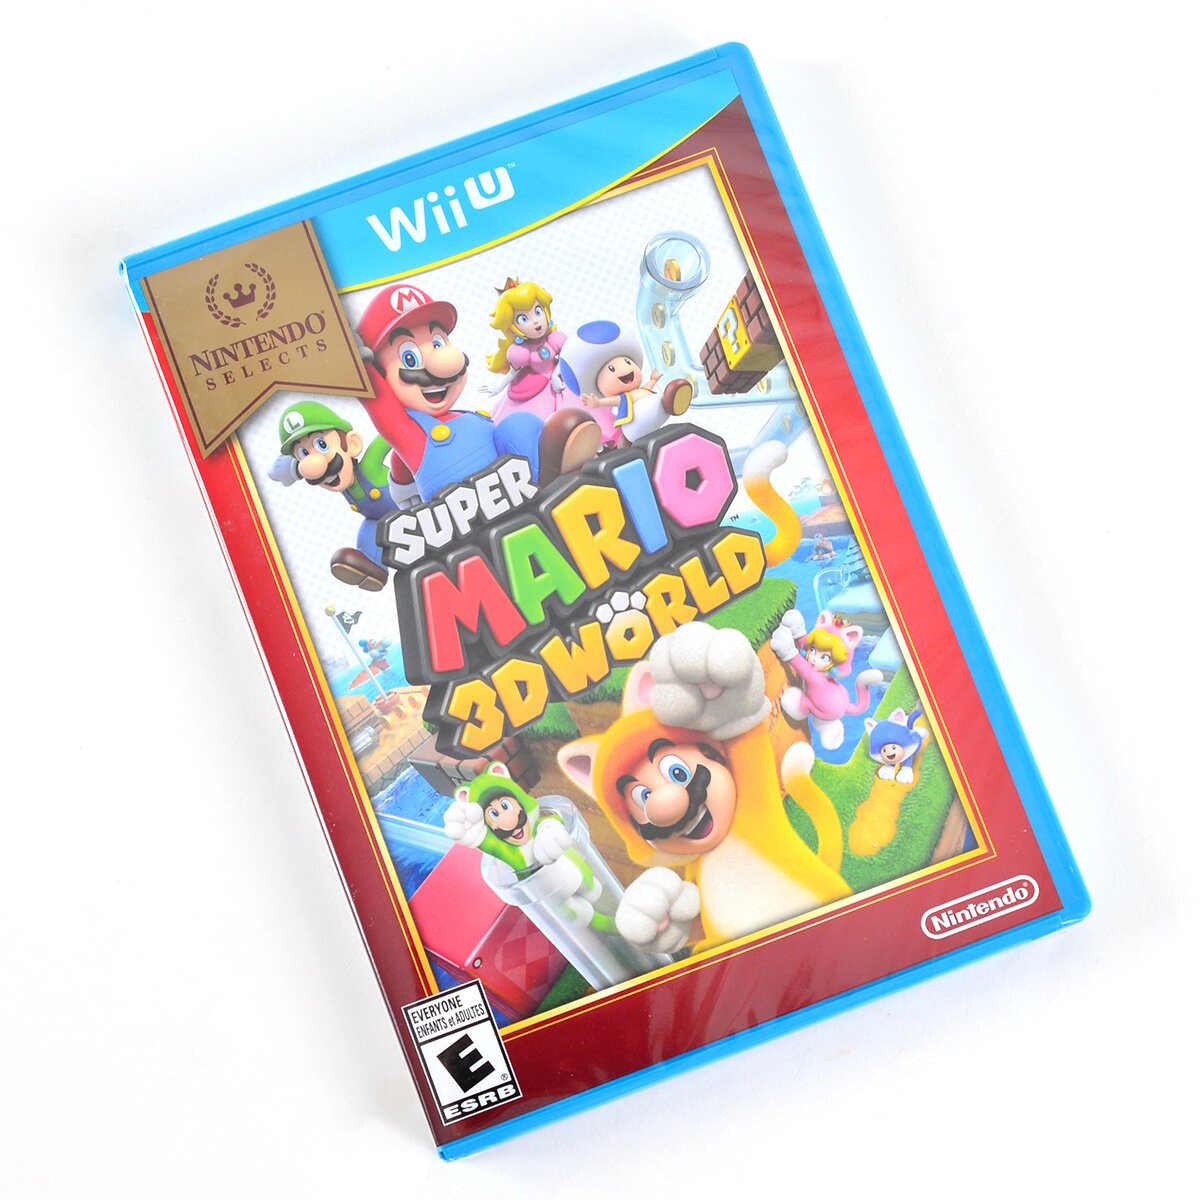 Jogo Wii U Super Mario 3D World